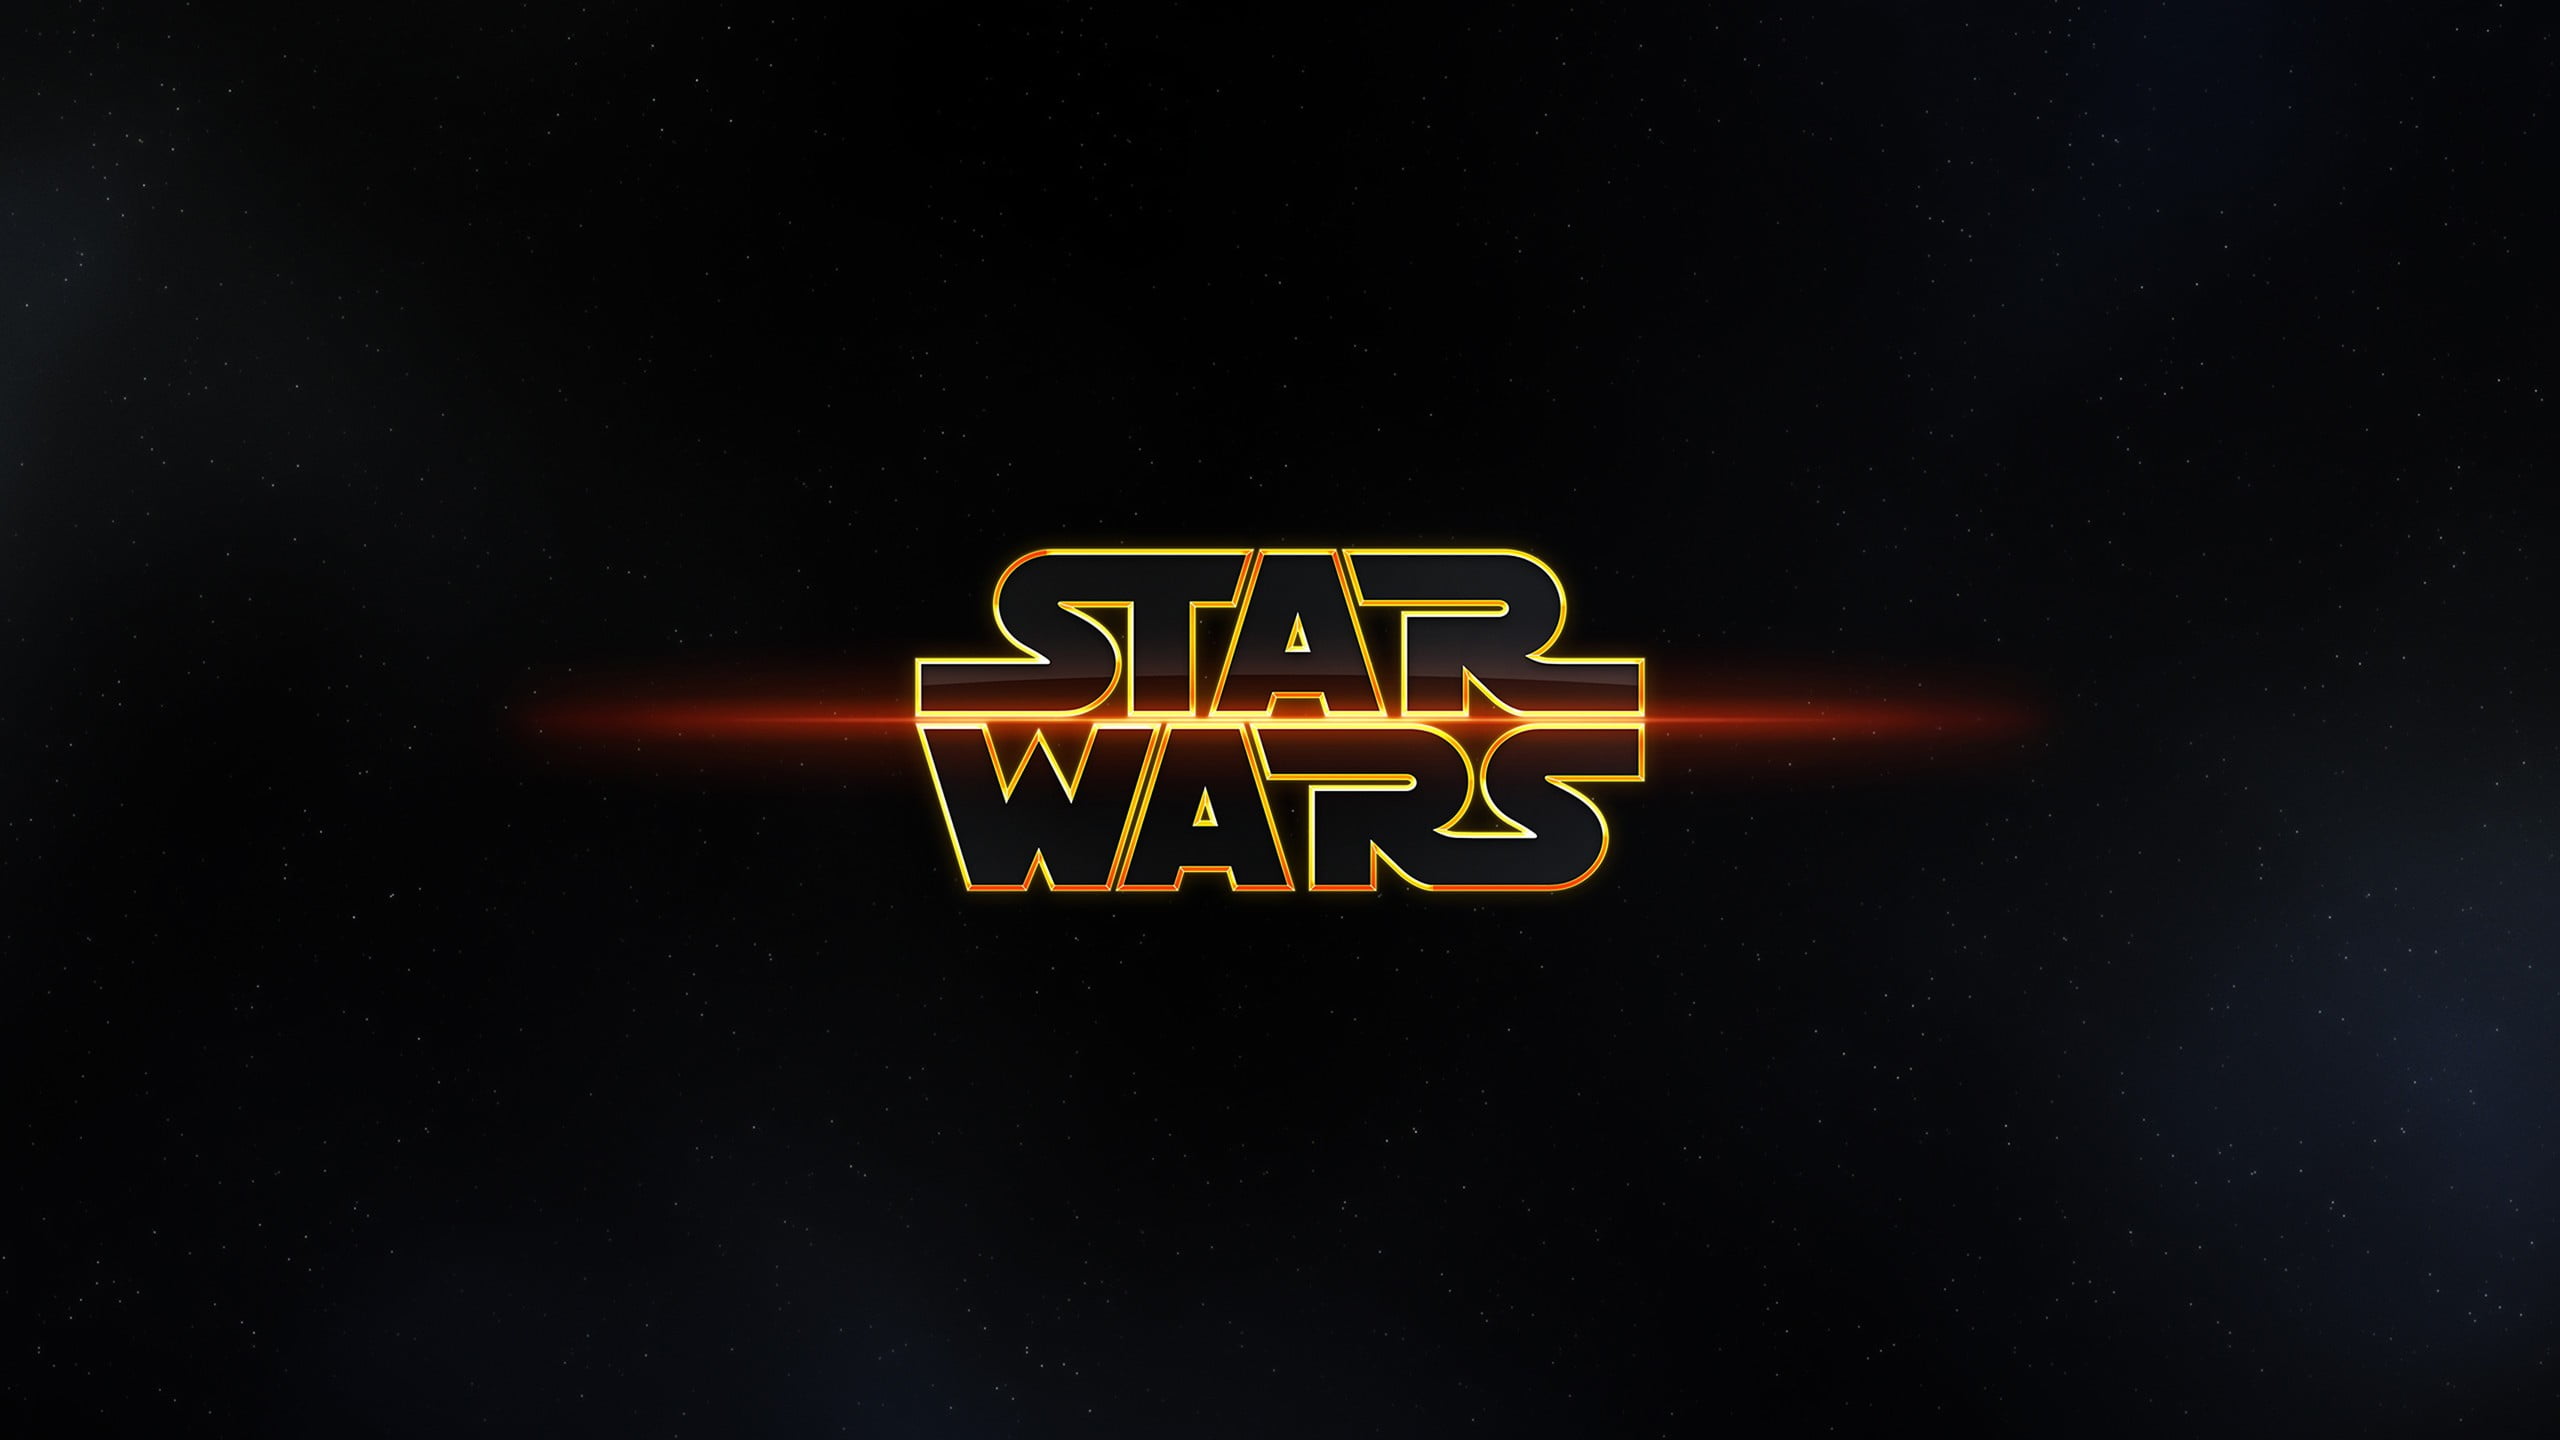 Star Wars logo, Star Wars, logo, movies, science fiction